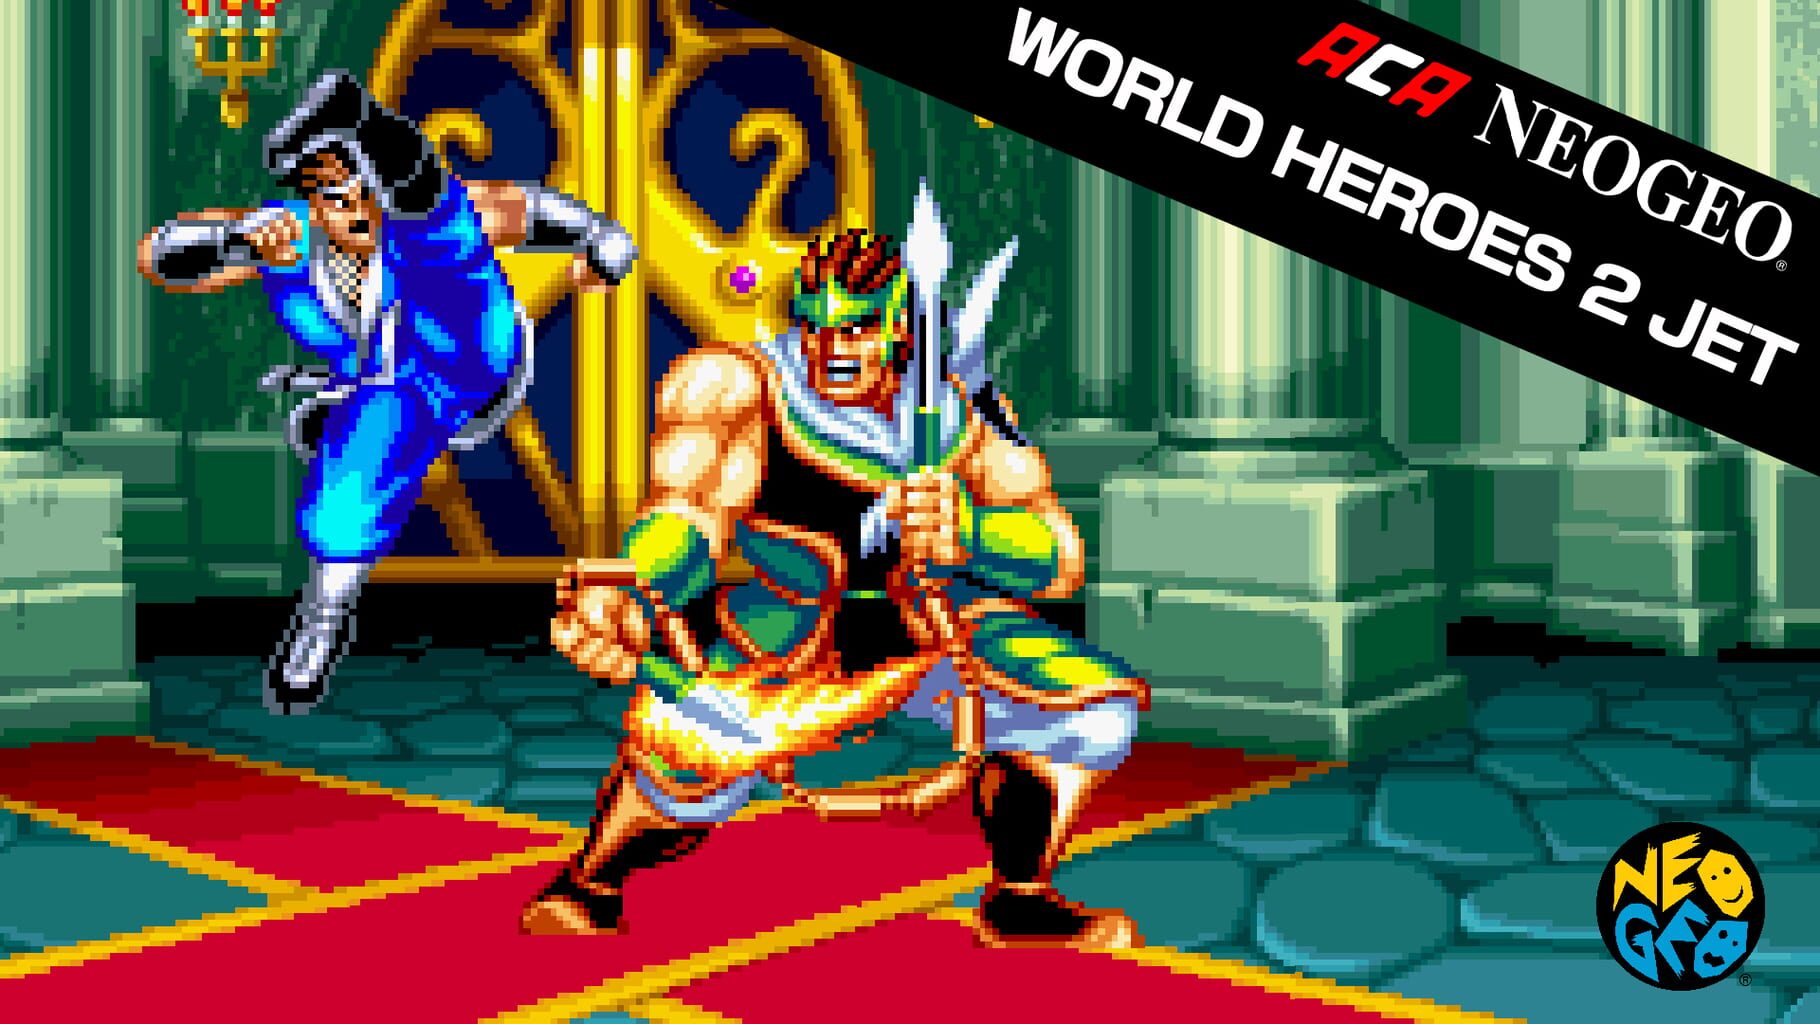 Arte - ACA Neo Geo: World Heroes 2 Jet